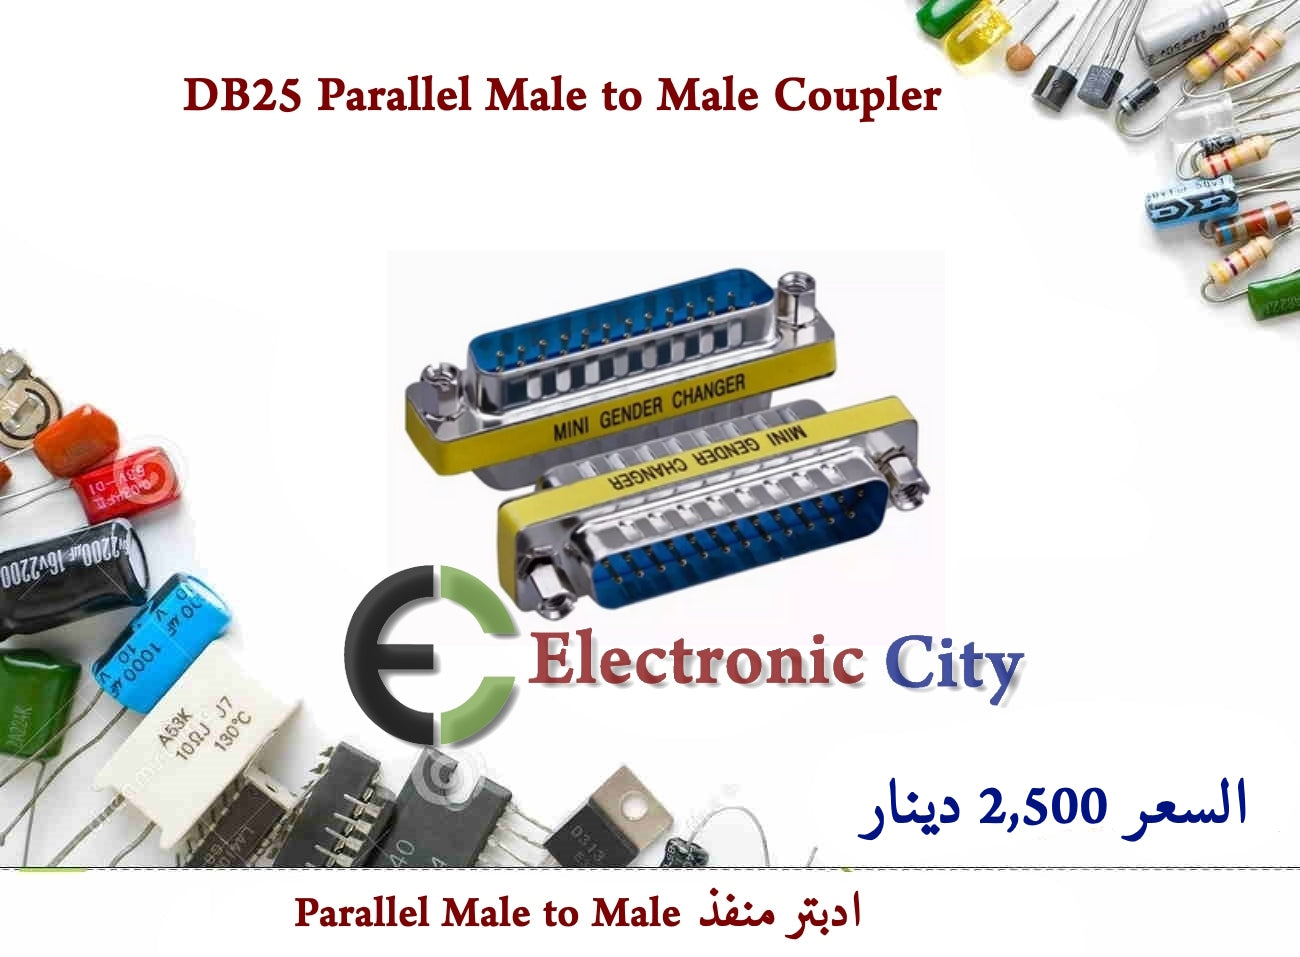 DB25 Parallel Male to Male Coupler #Q6 GYAJ0088-010